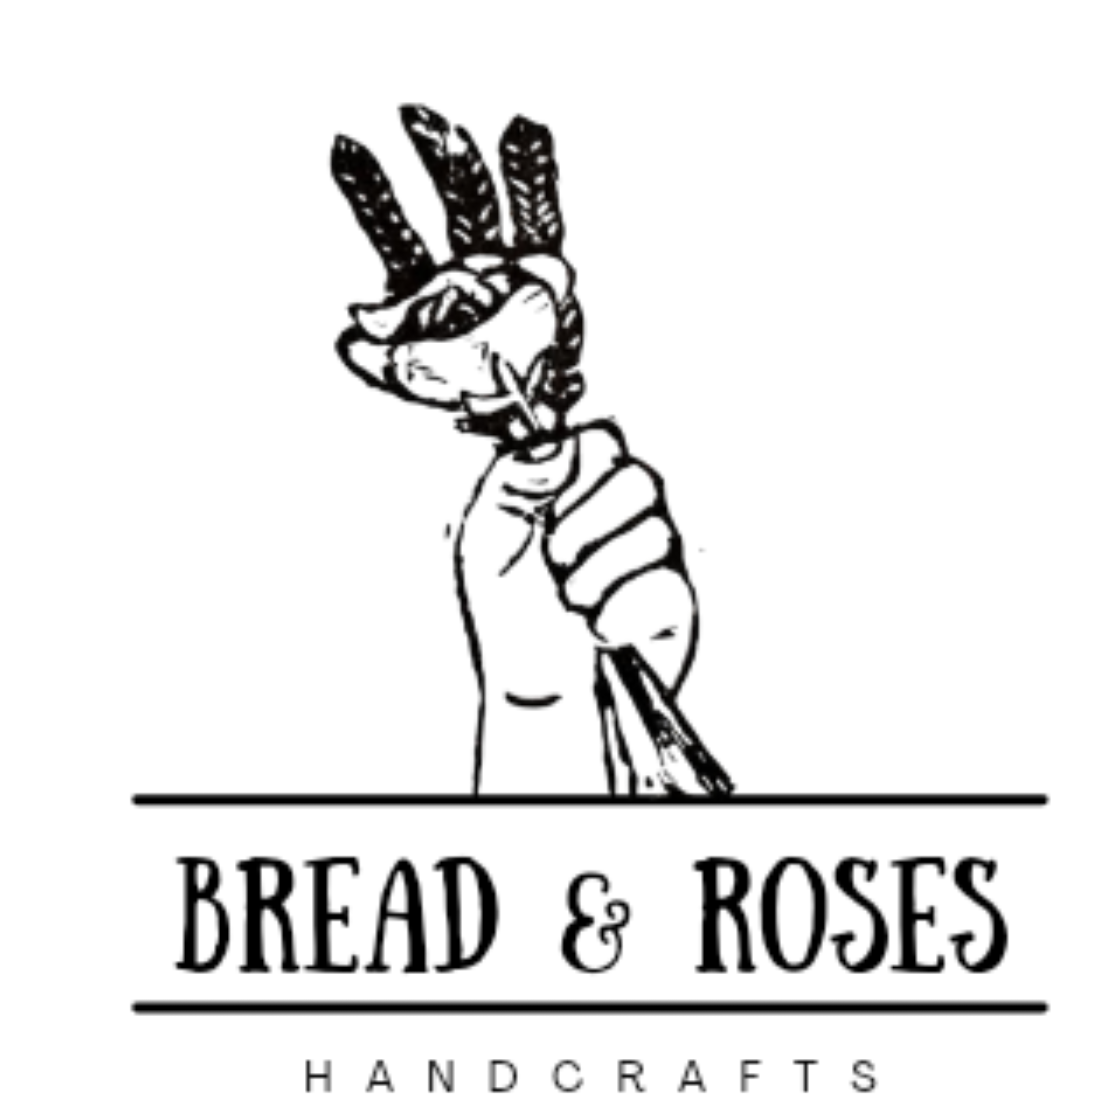 Bread & Roses Handcrafts